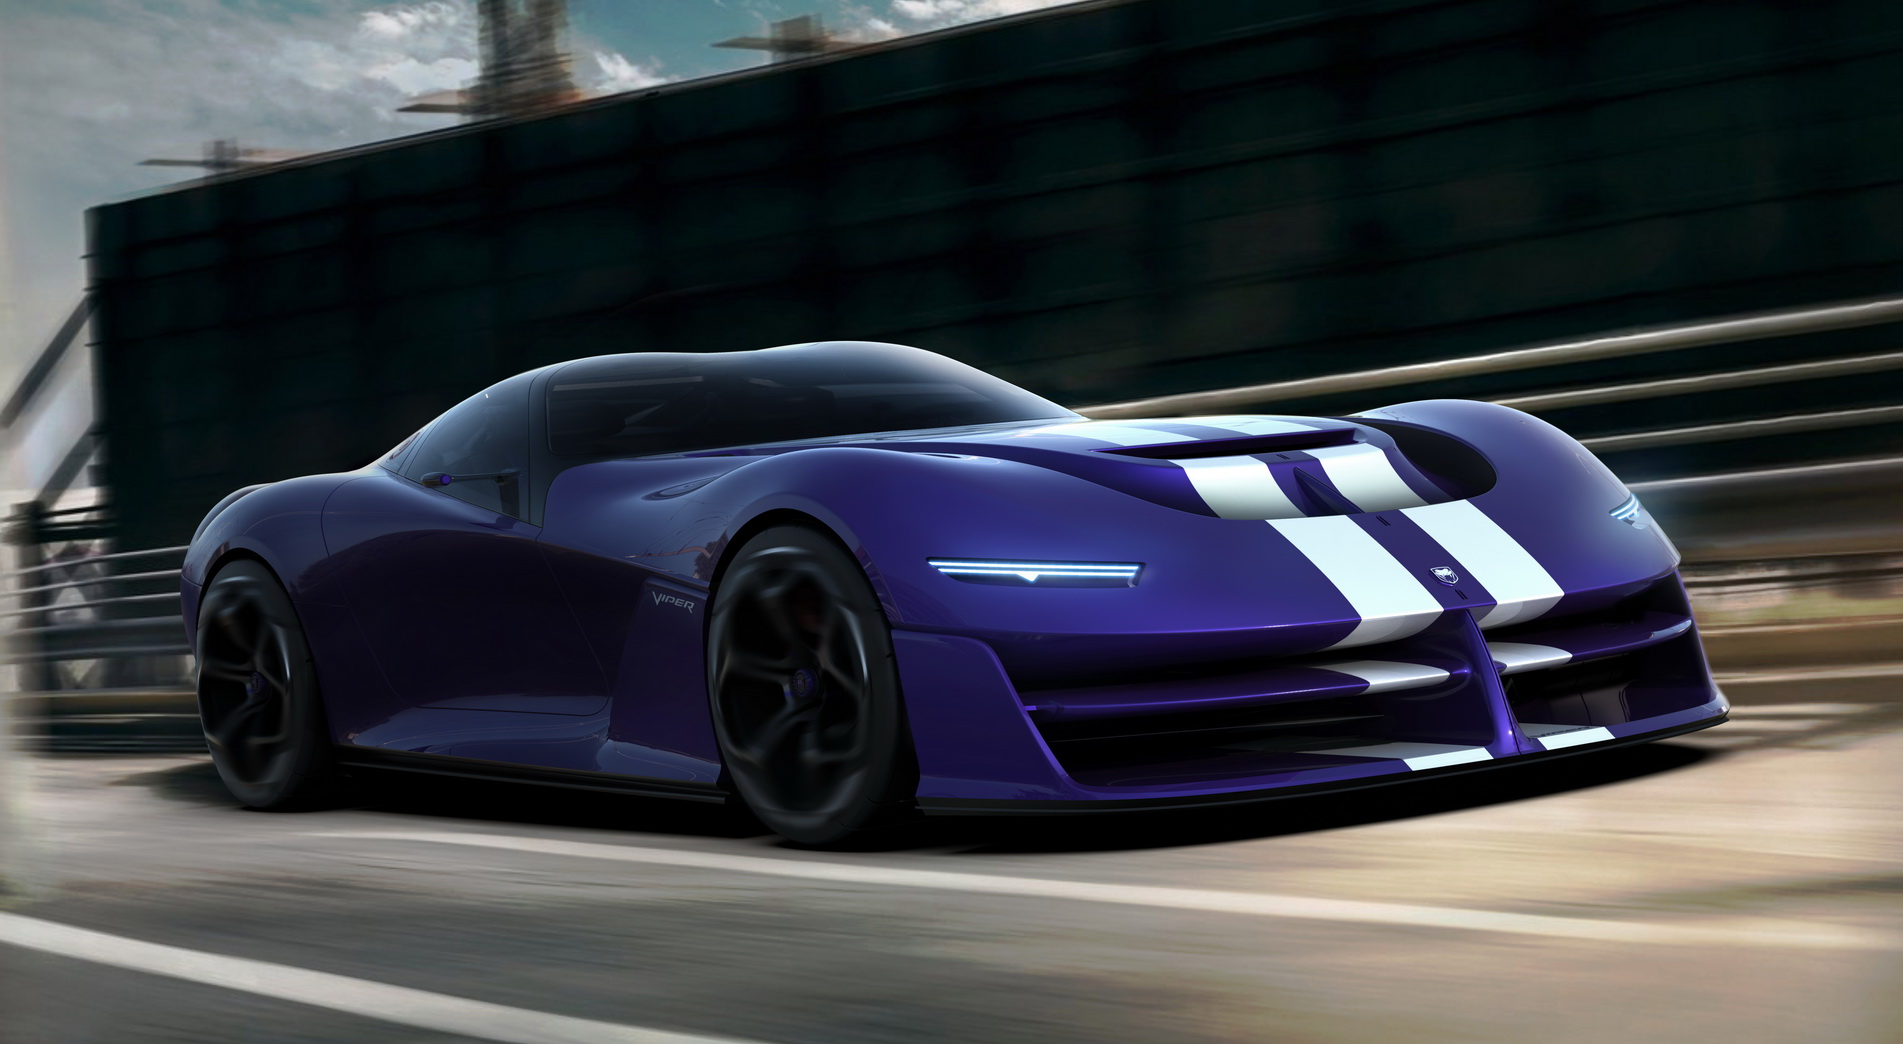 NextGen Dodge Viper Looks Like the Ultimate Supercar in Stunning New